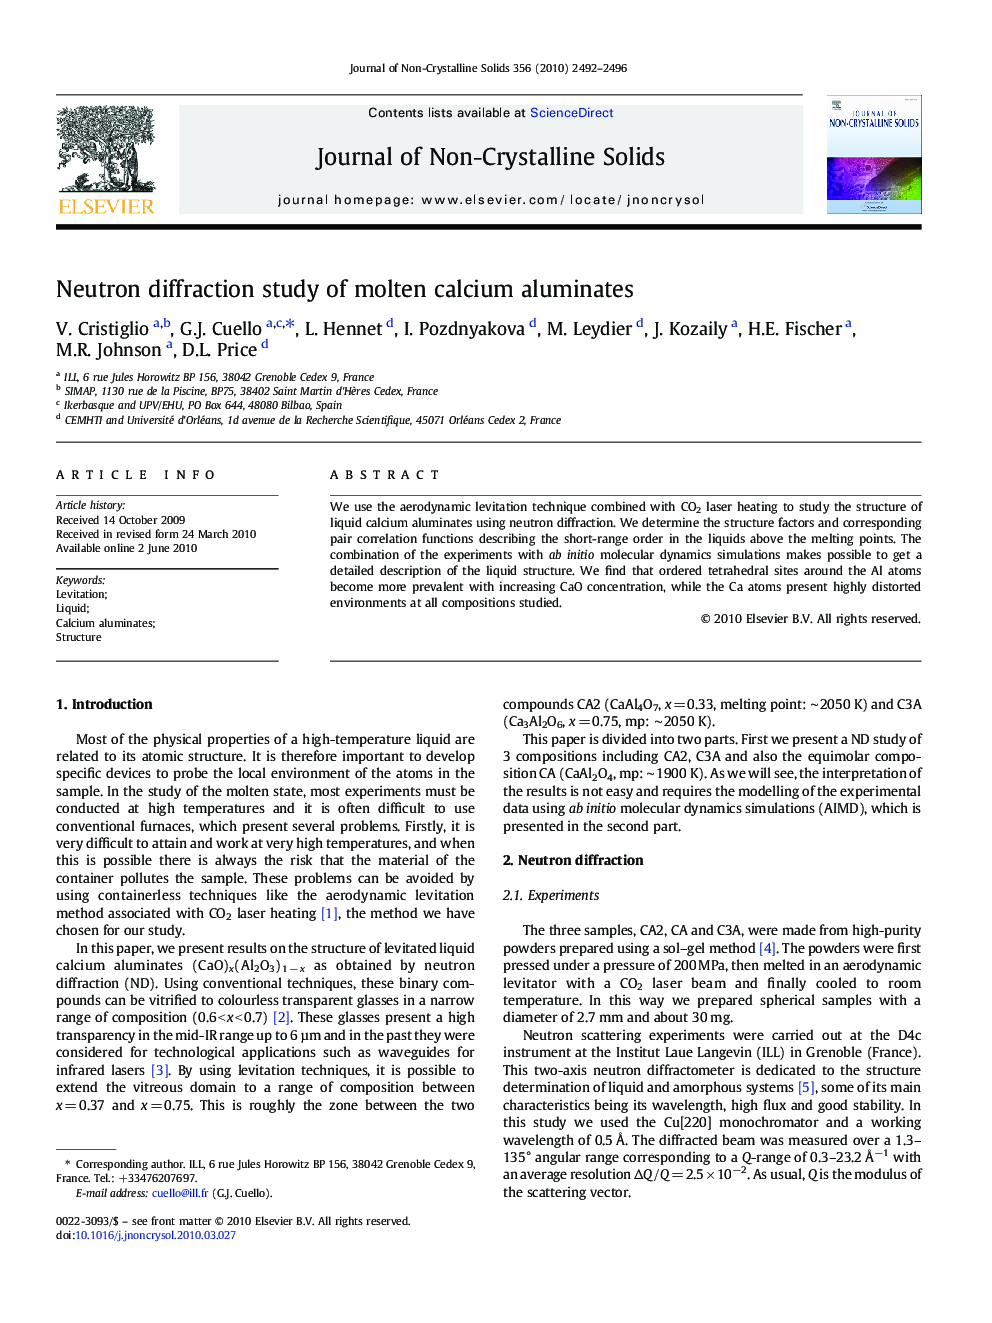 Neutron diffraction study of molten calcium aluminates